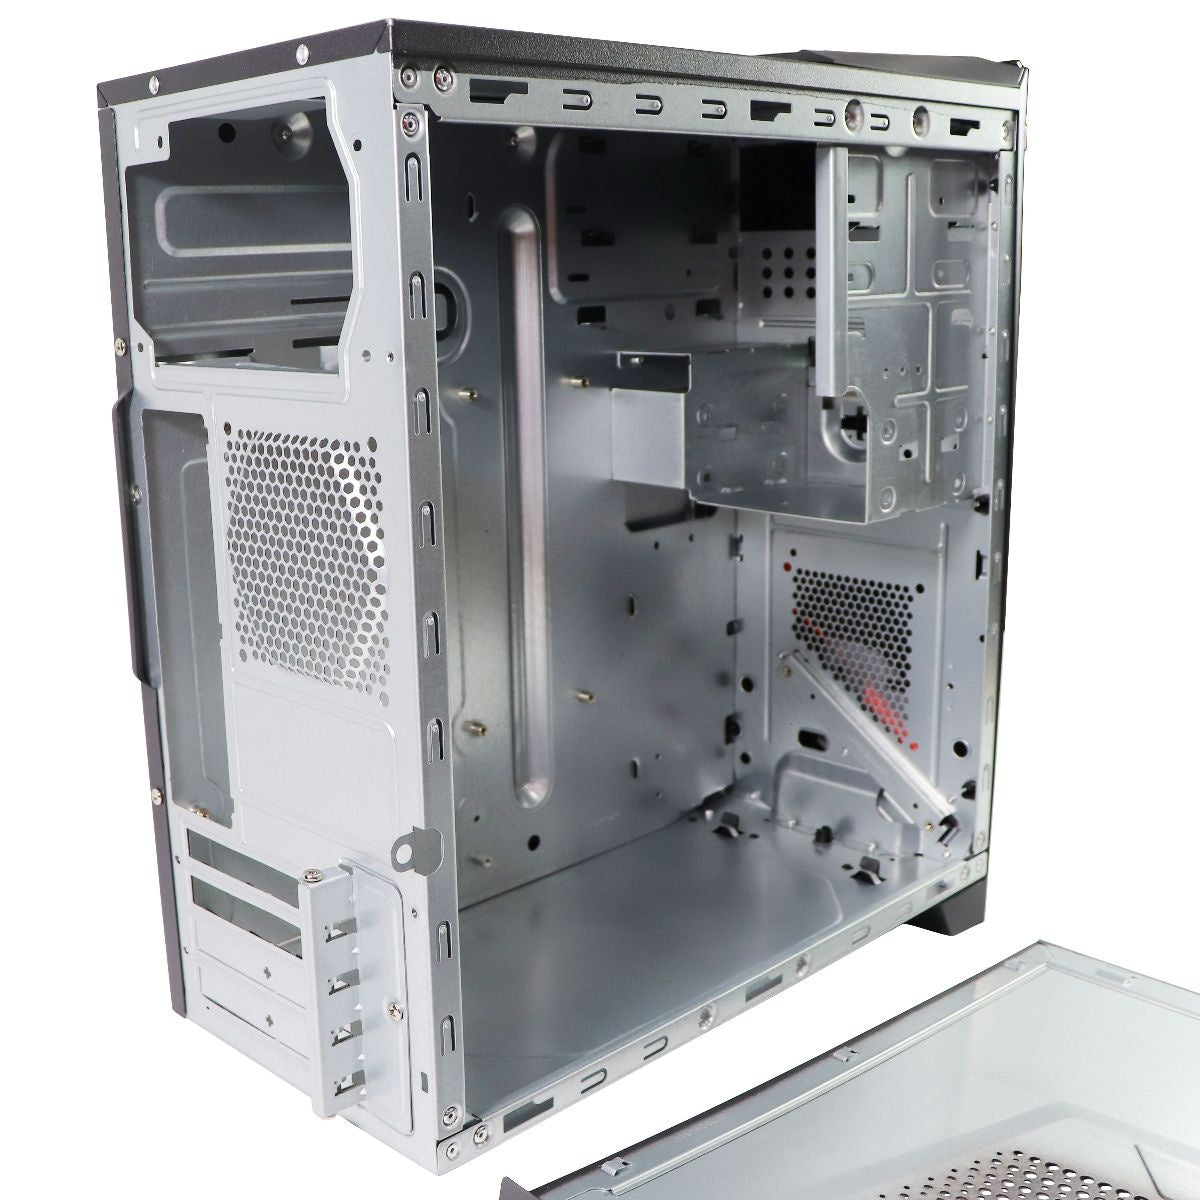 ASUS (Empty/No Internal Parts) Desktop Case Assembly (13PD01G1AM0241) Computer Parts - Computer Cases ASUS    - Simple Cell Bulk Wholesale Pricing - USA Seller